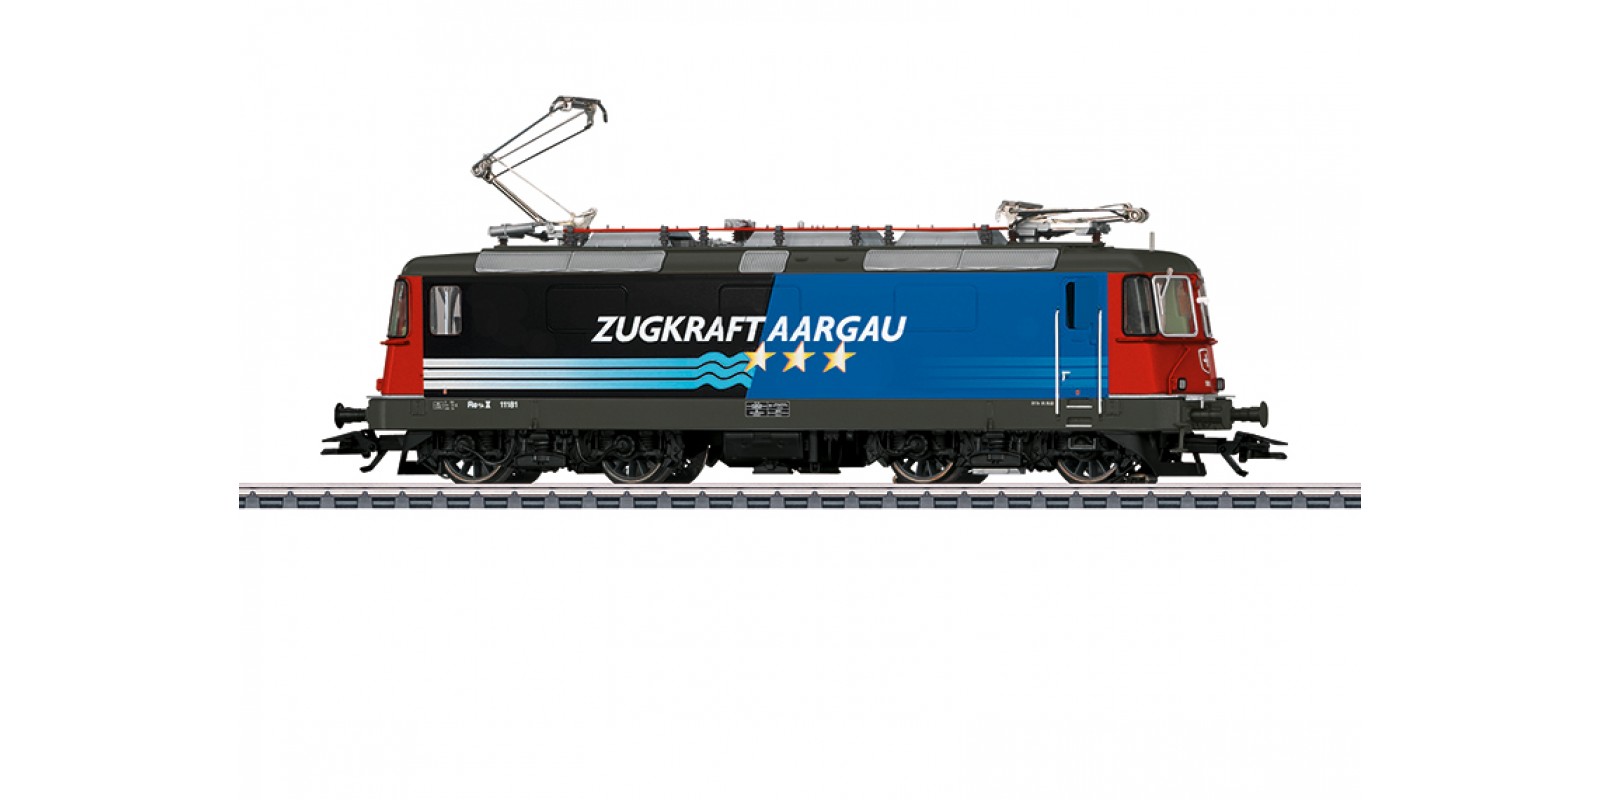 37306 Class Re 4/4 II Electric Locomotive